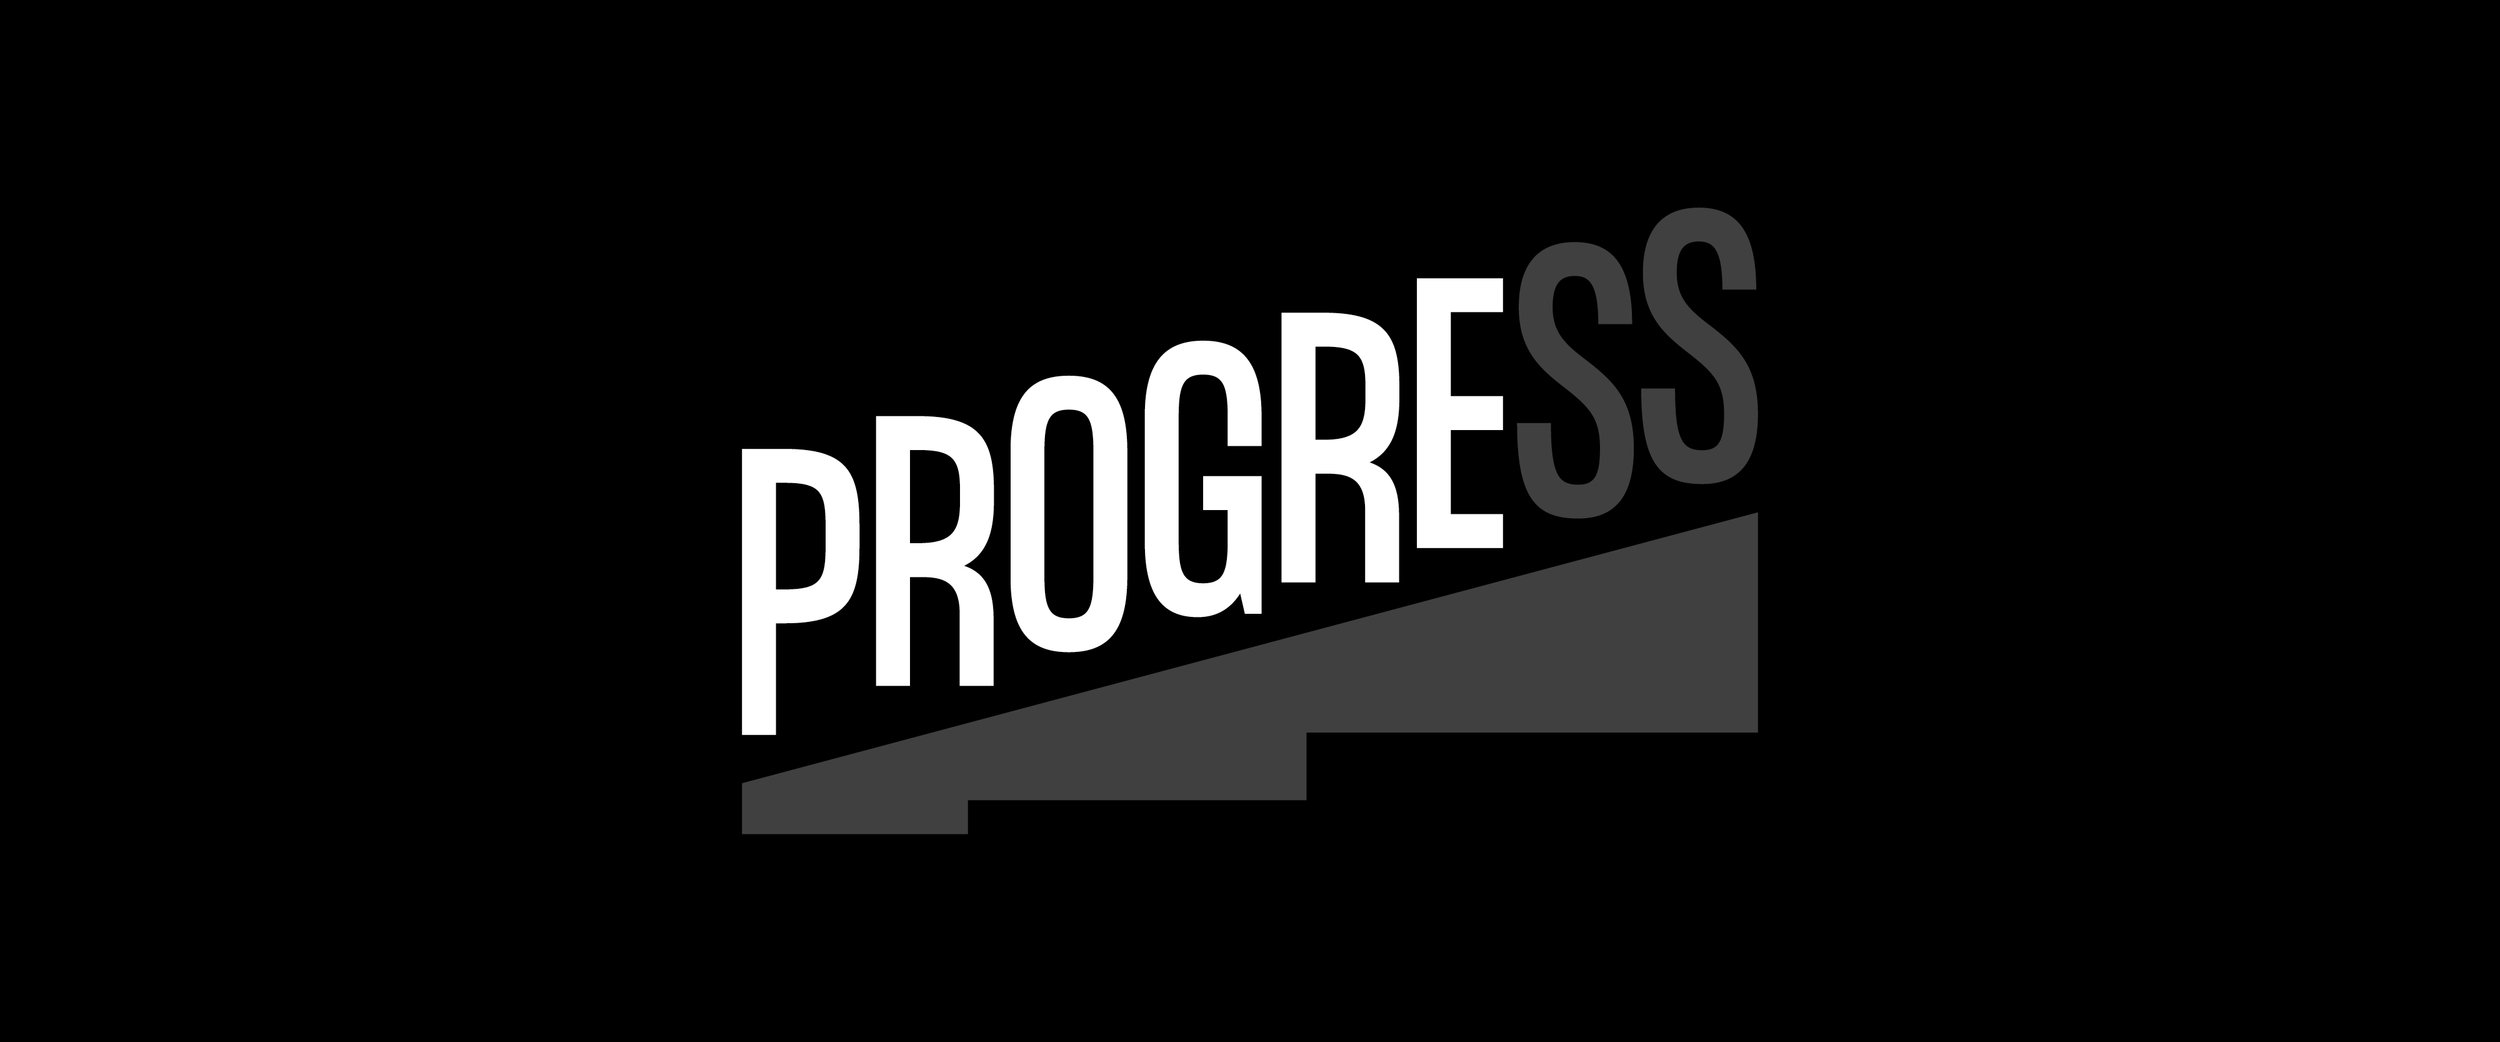 ucm-progress-logo5.jpg